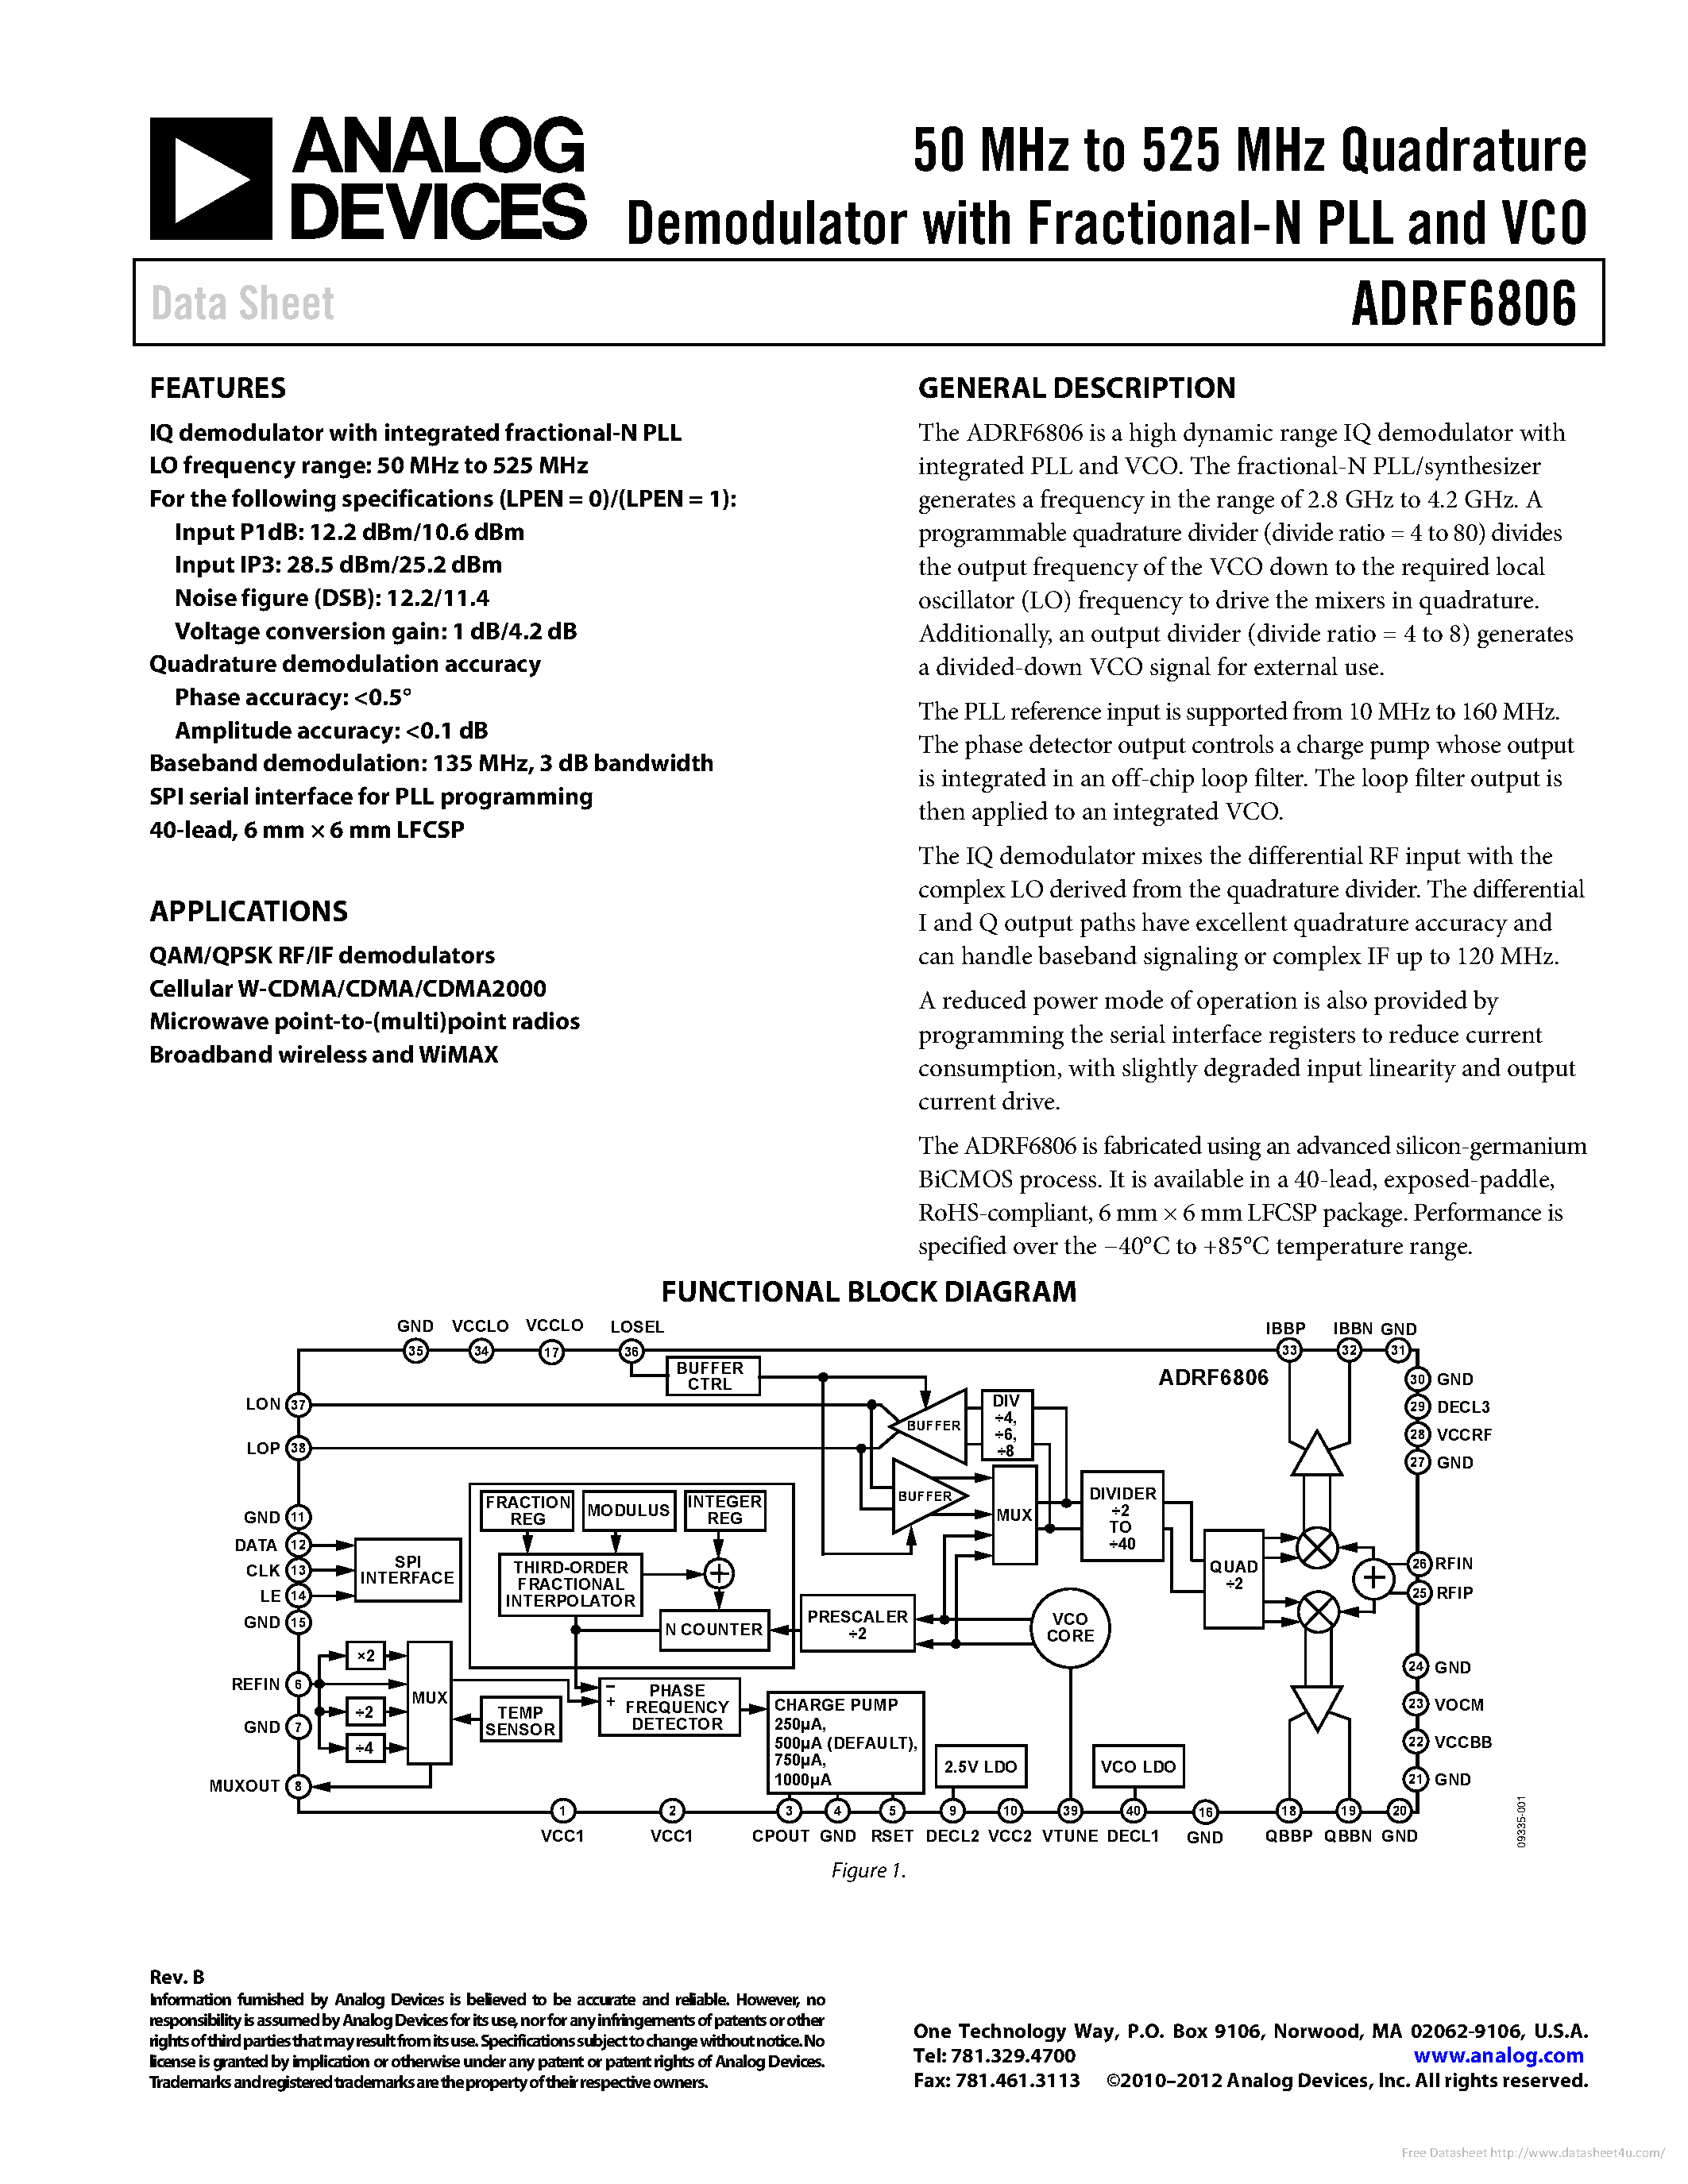 Datasheet ADRF6806 - page 1